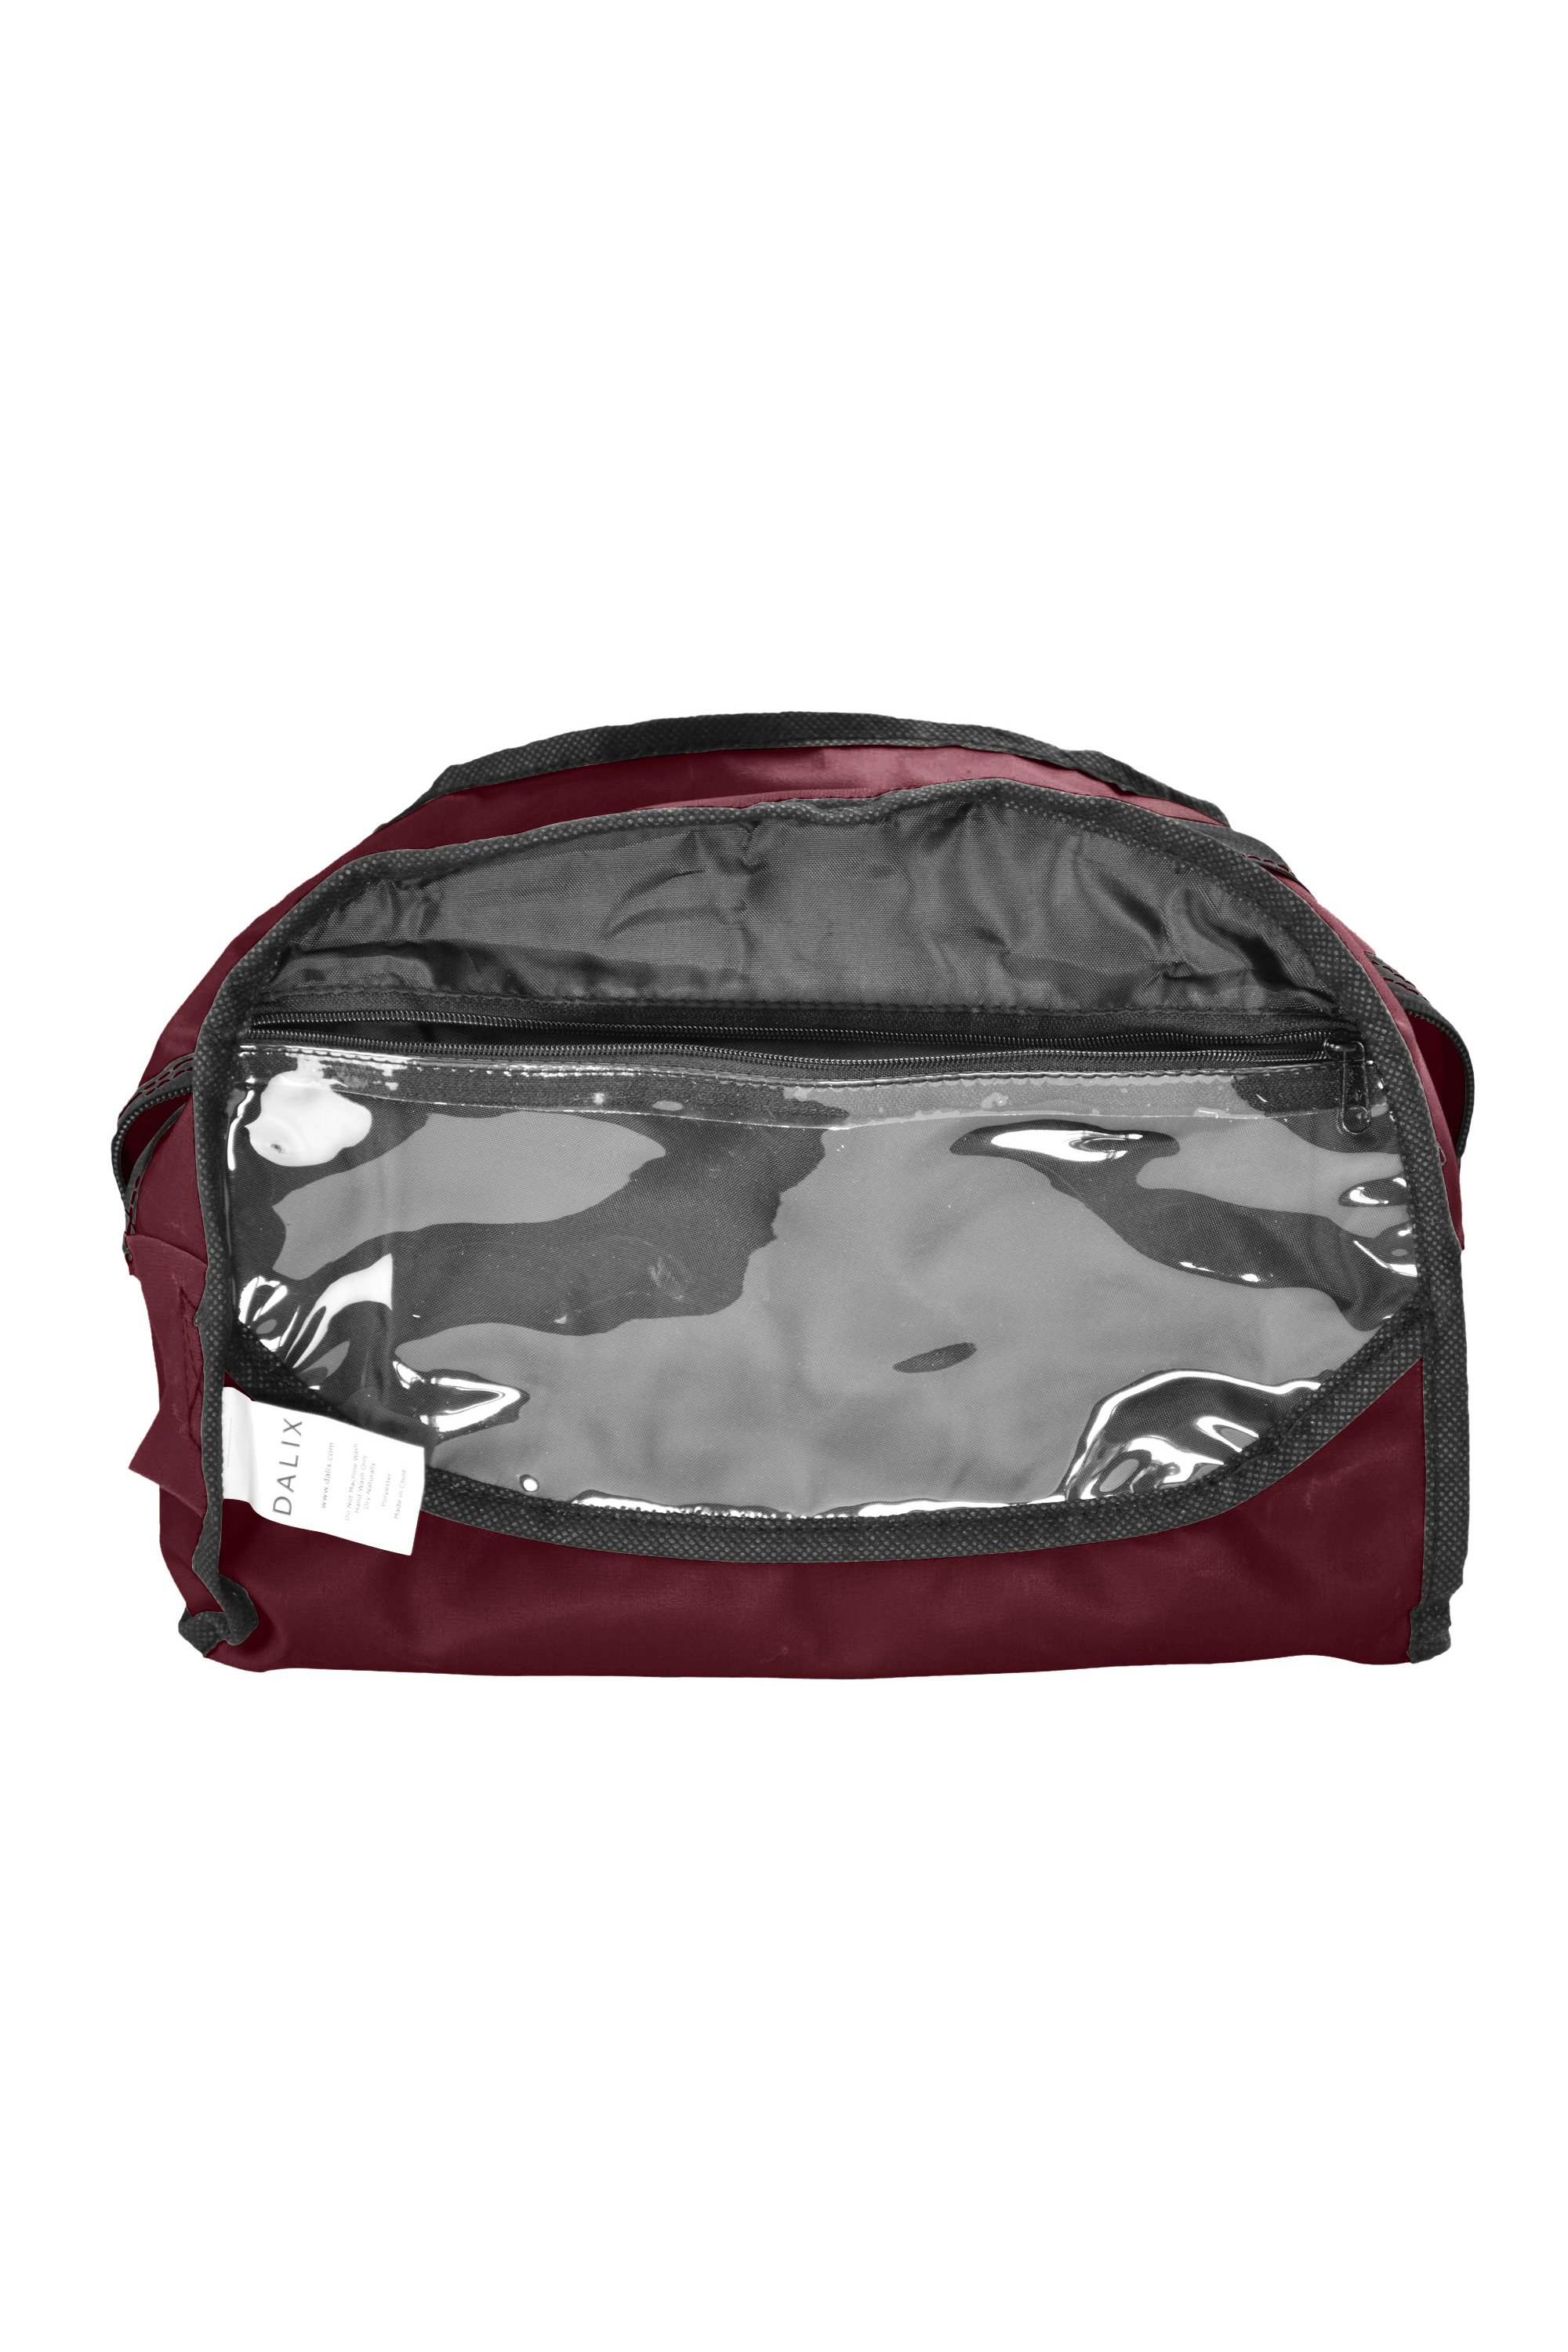 DALIX 12" Mini Duffel Bag Gym Duffle in Maroon - image 4 of 7